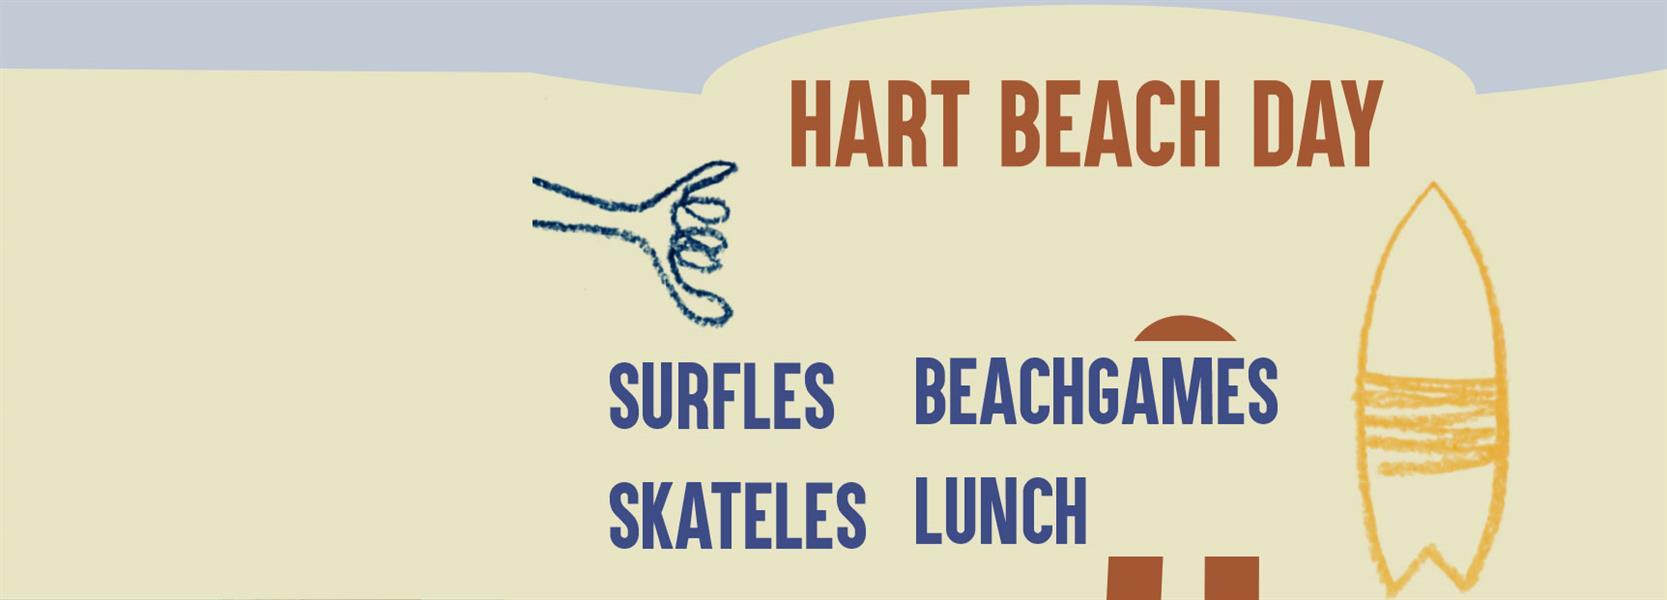 Hart Beach Day - MainBanner